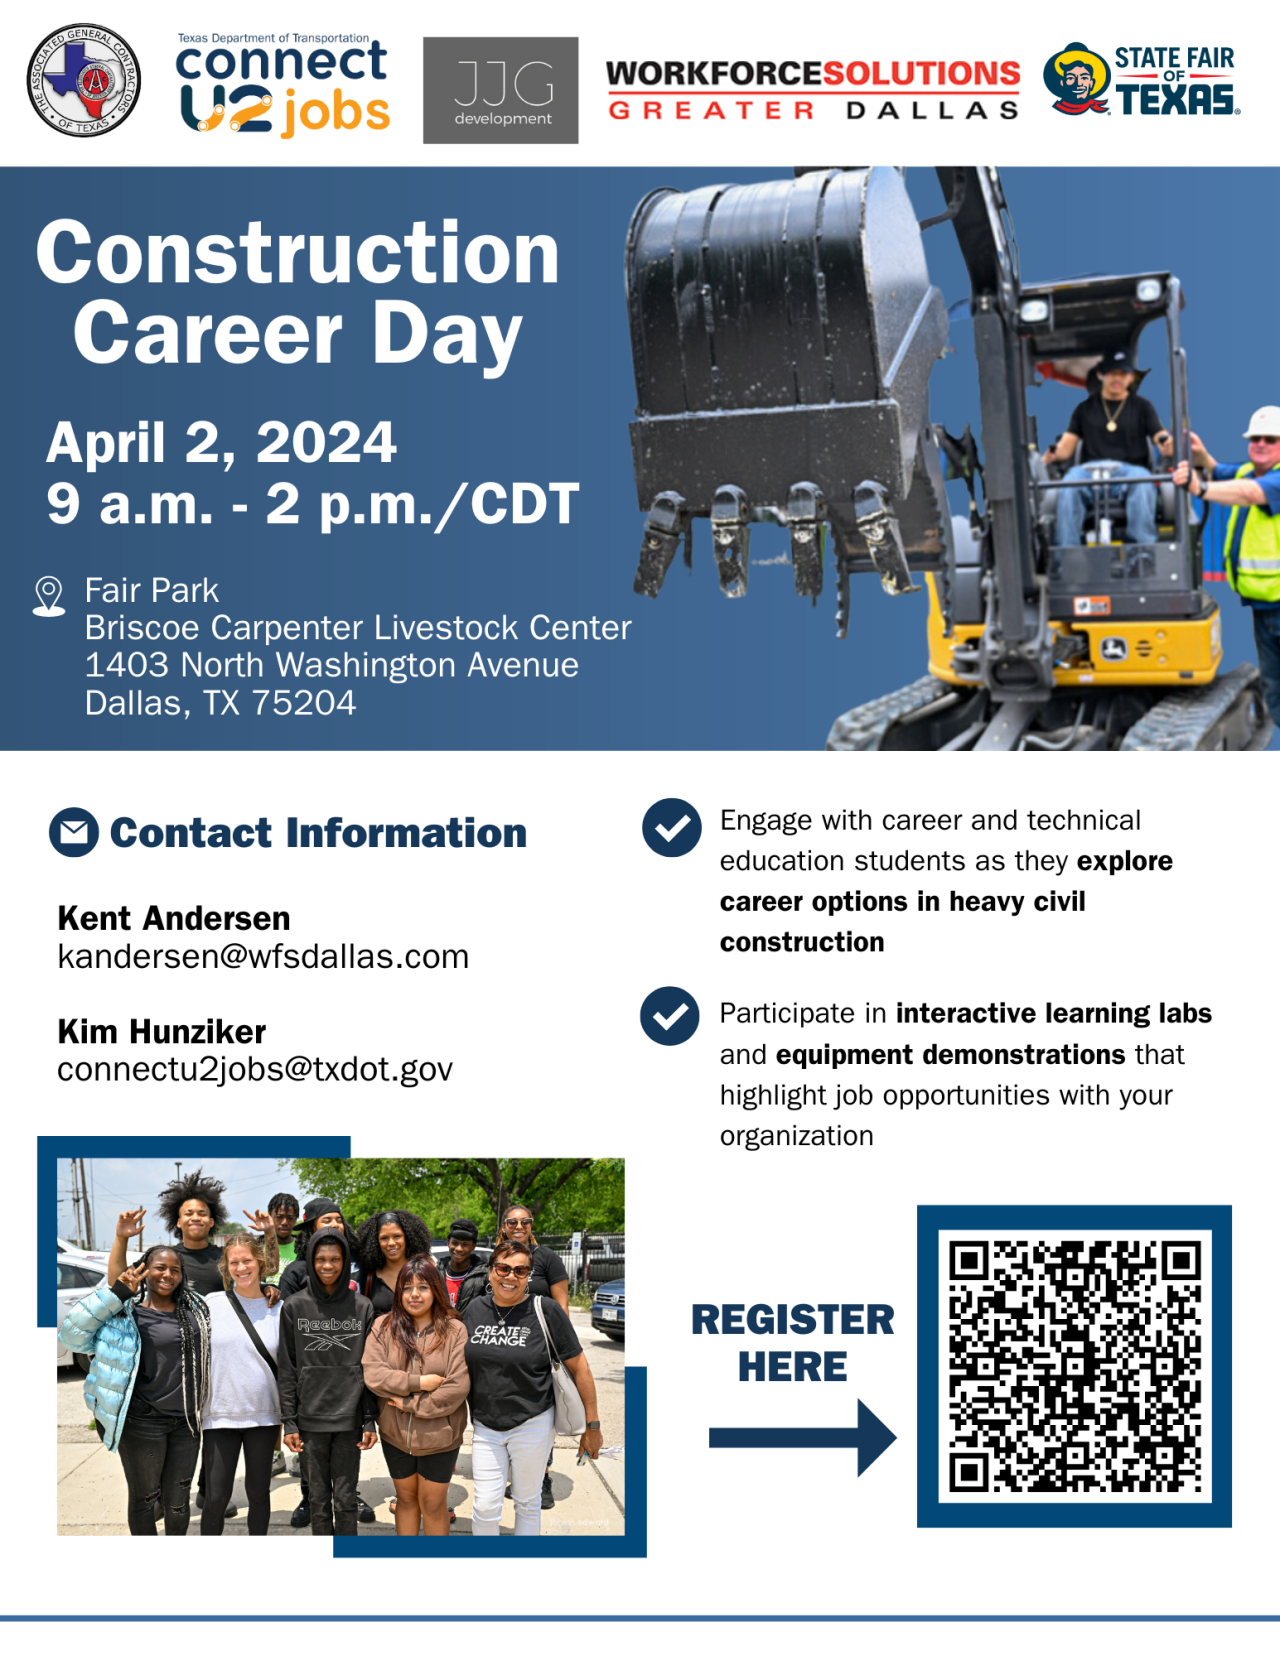 Register for Construction Career Day